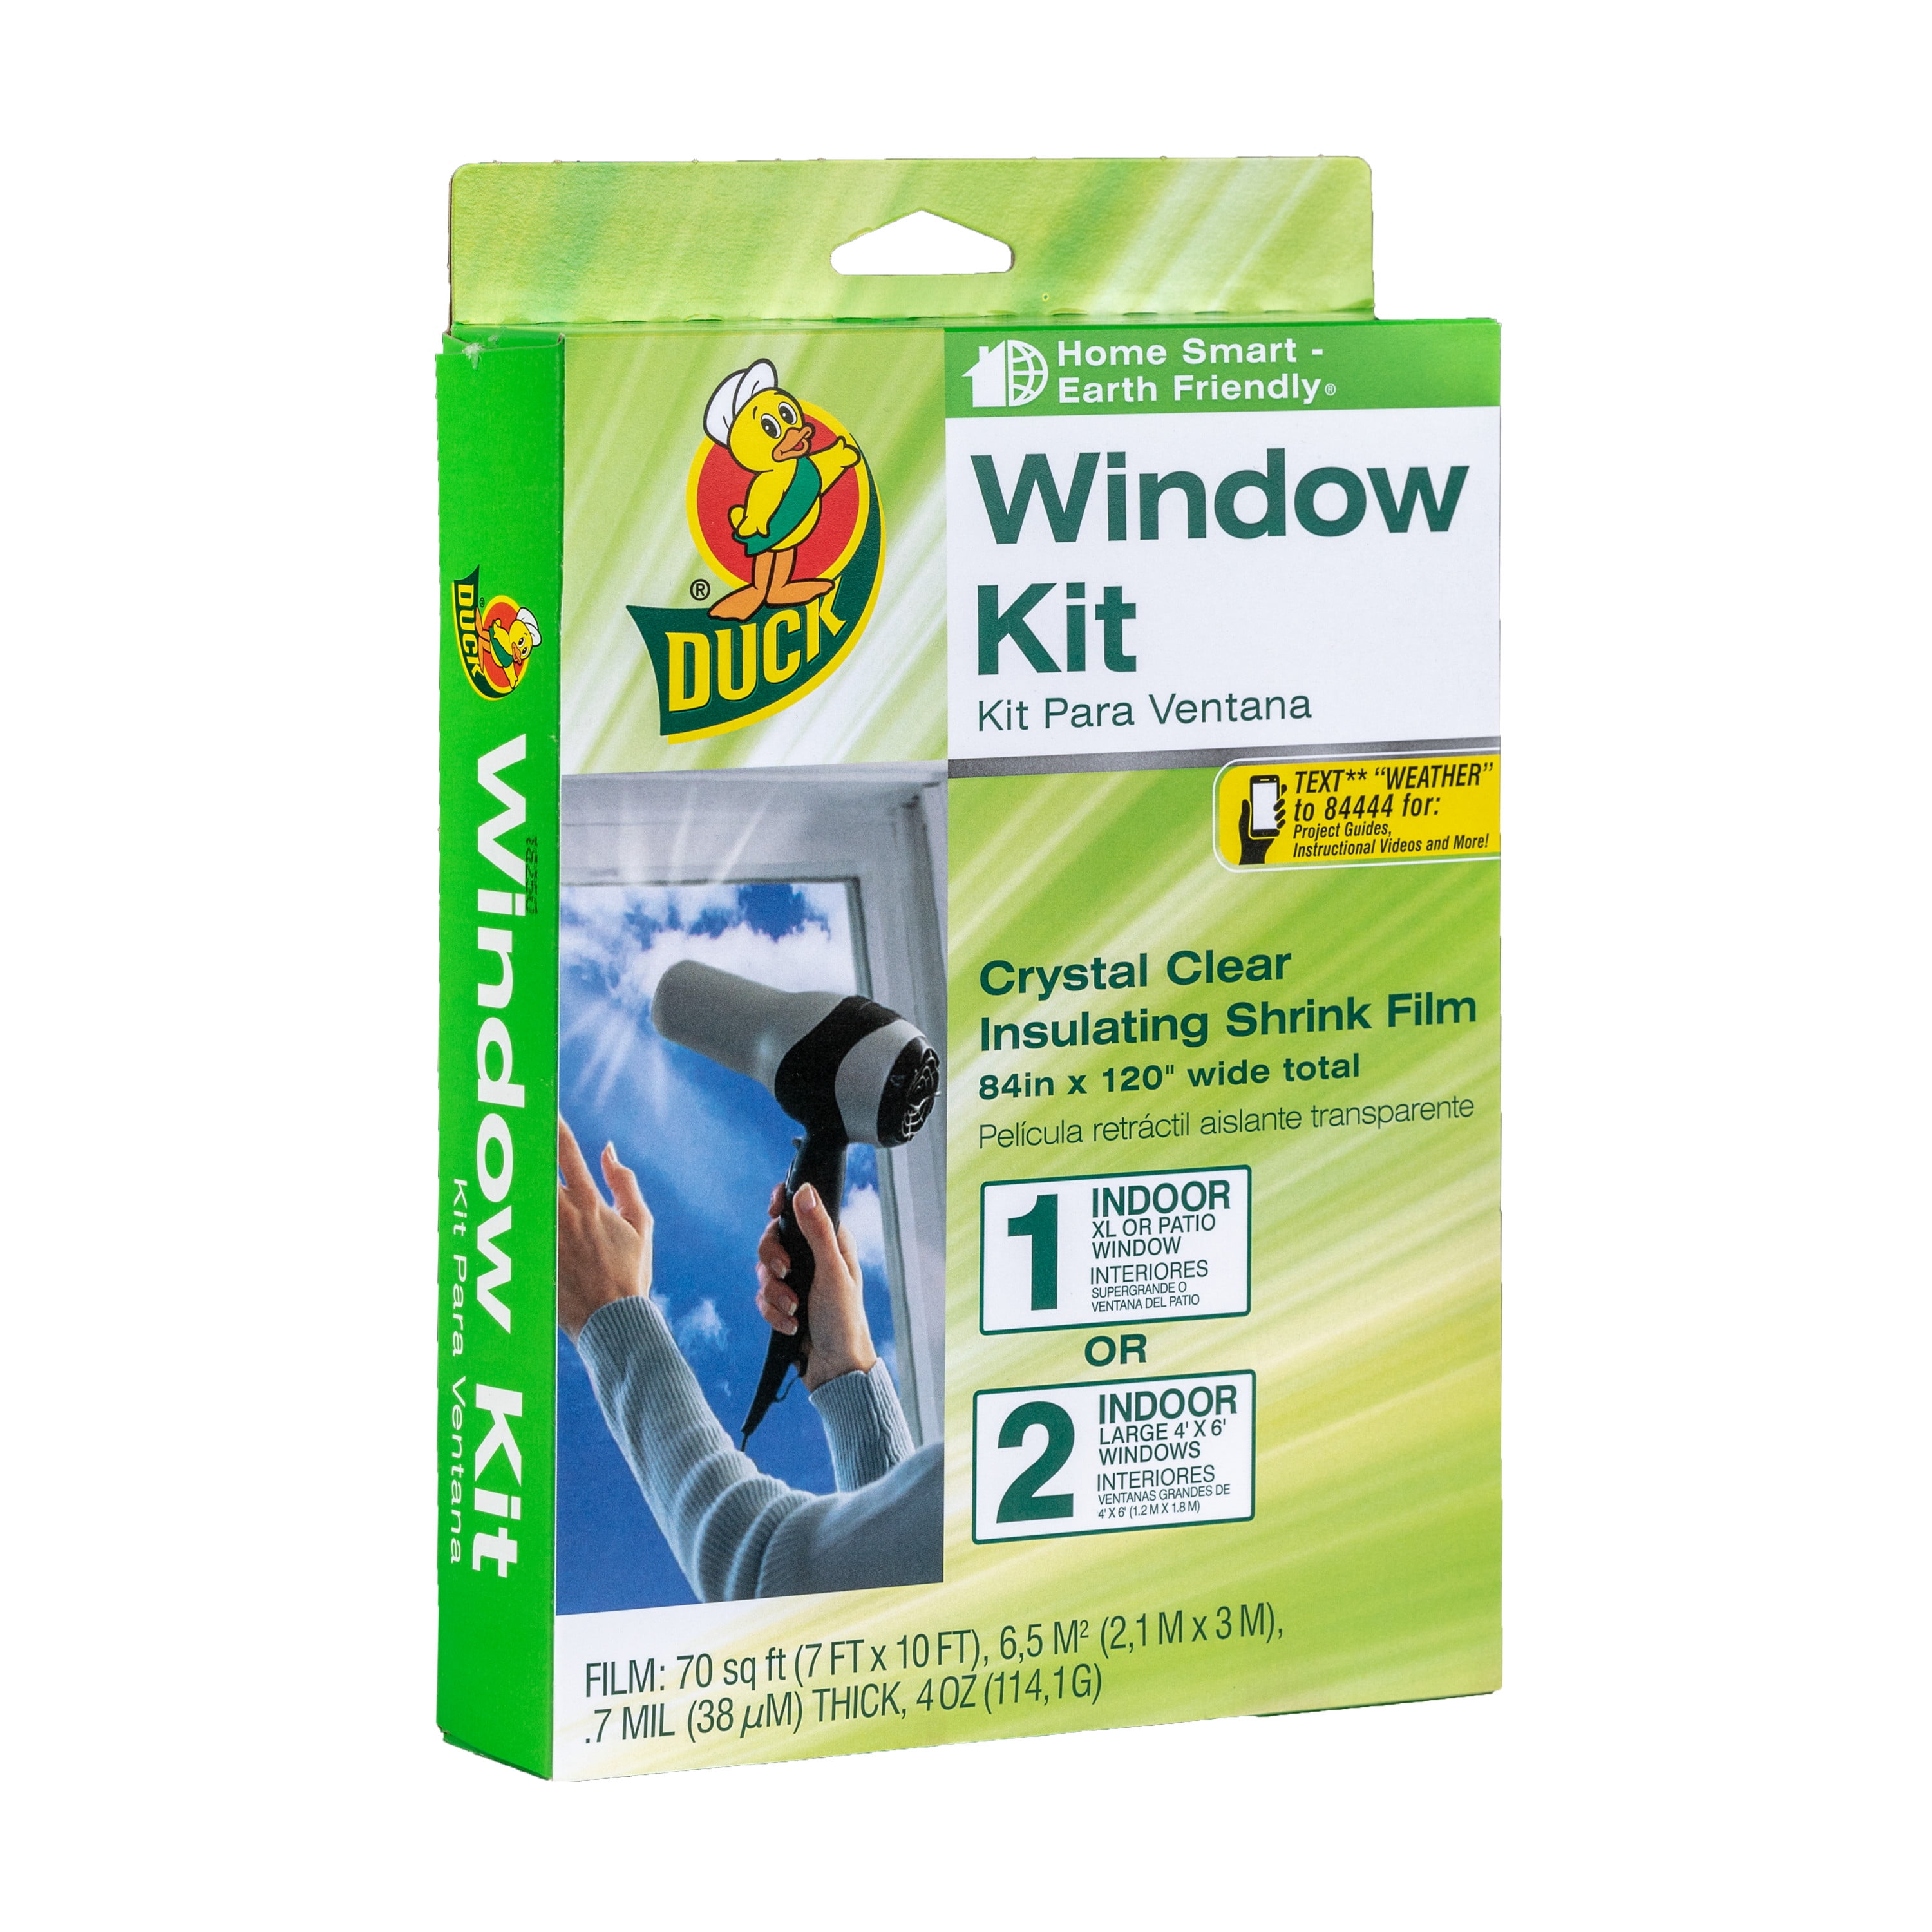 NIB-DUCK WINDOW INSULATING KIT-In Box is 5-3x5 Windows Shrink Film Indoor-62x210 